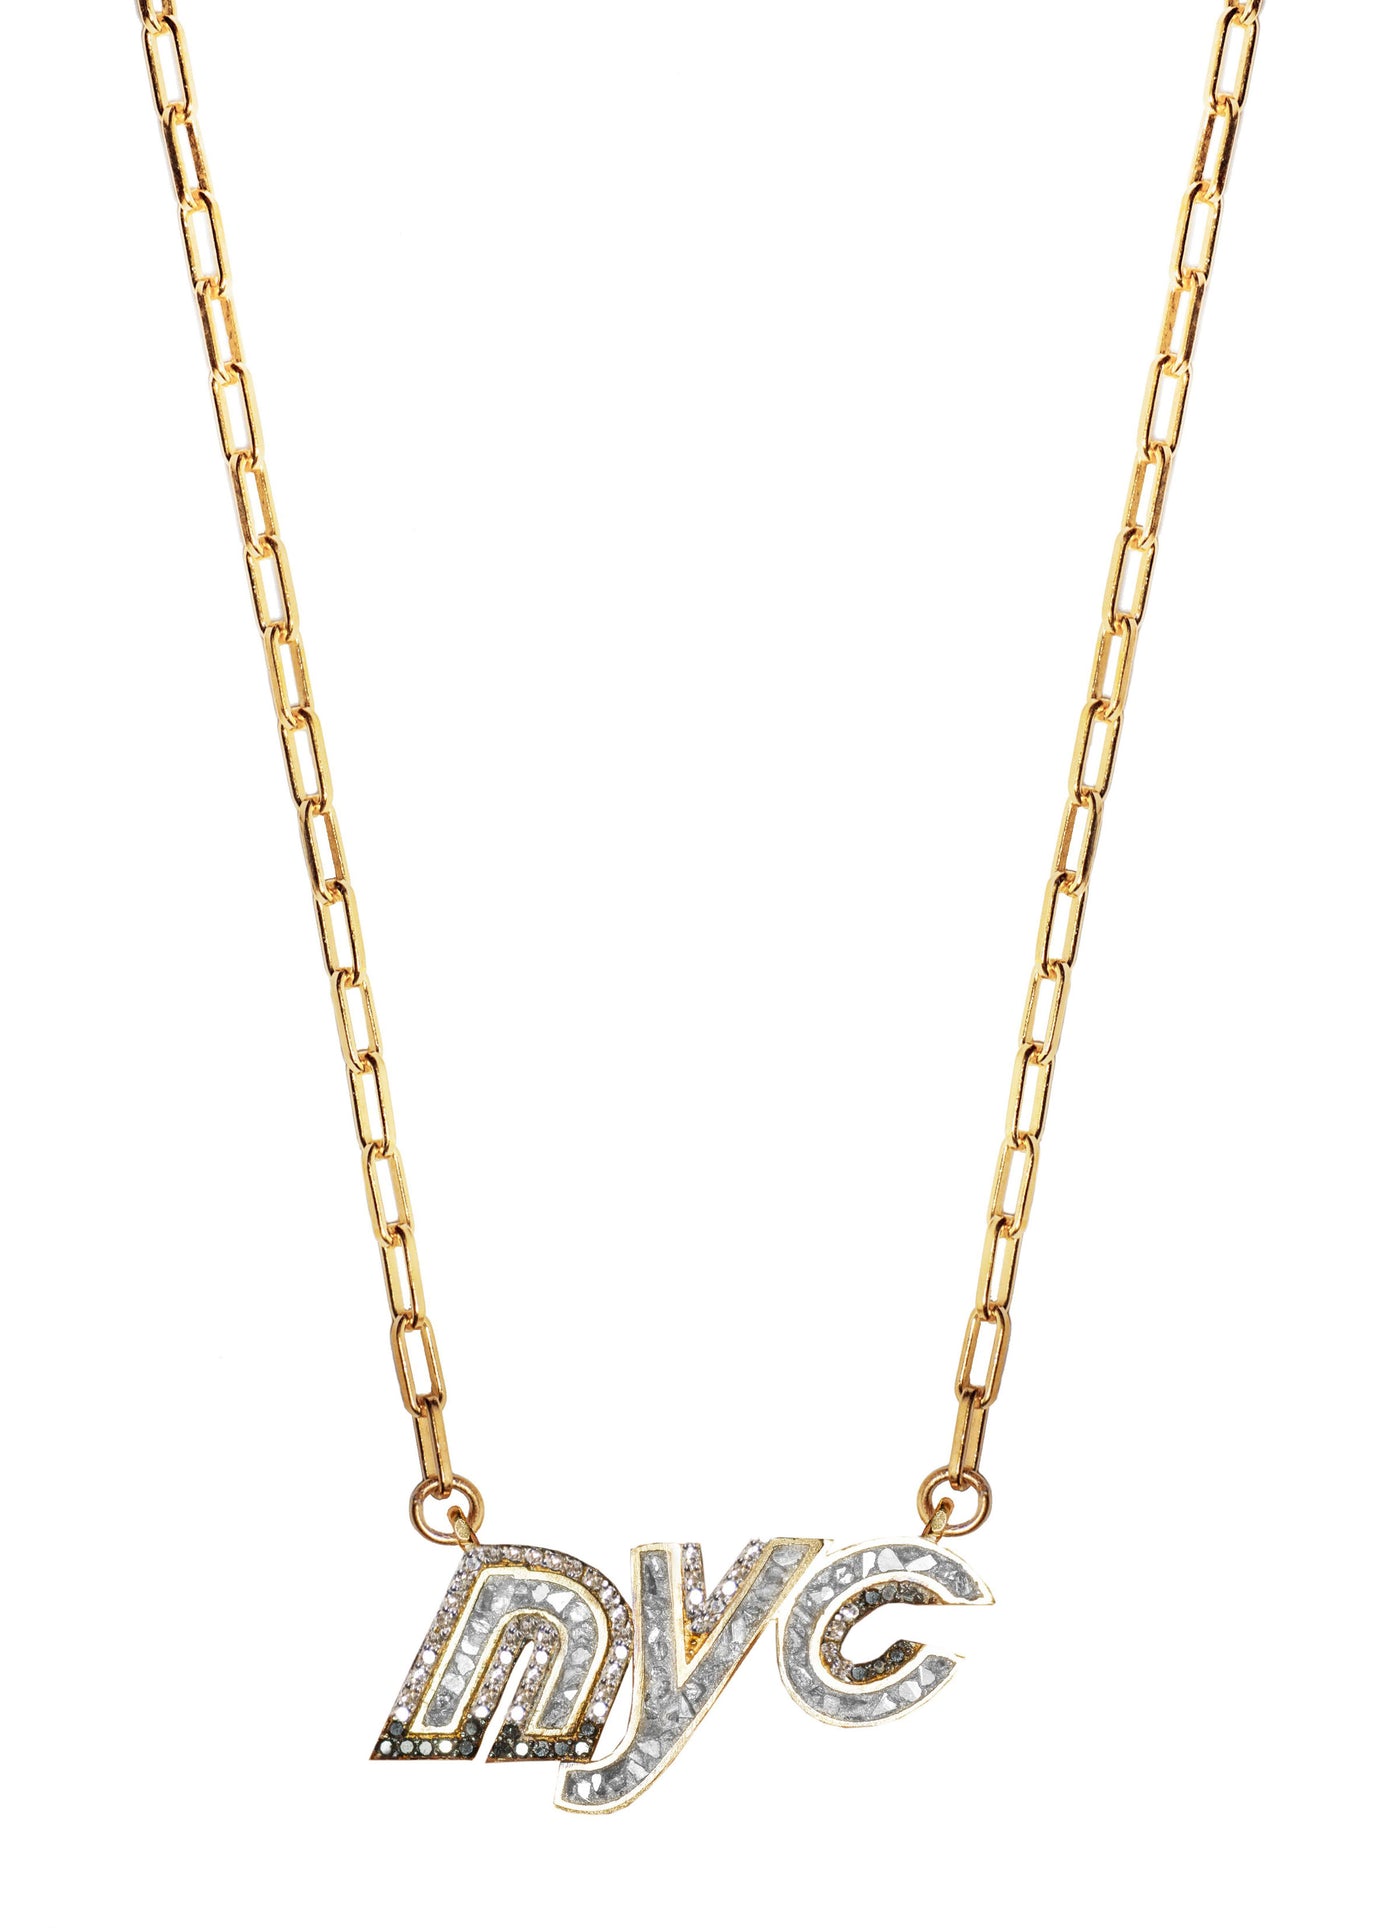 NYC Black Diamond Gold Vermeil Pendant Necklace